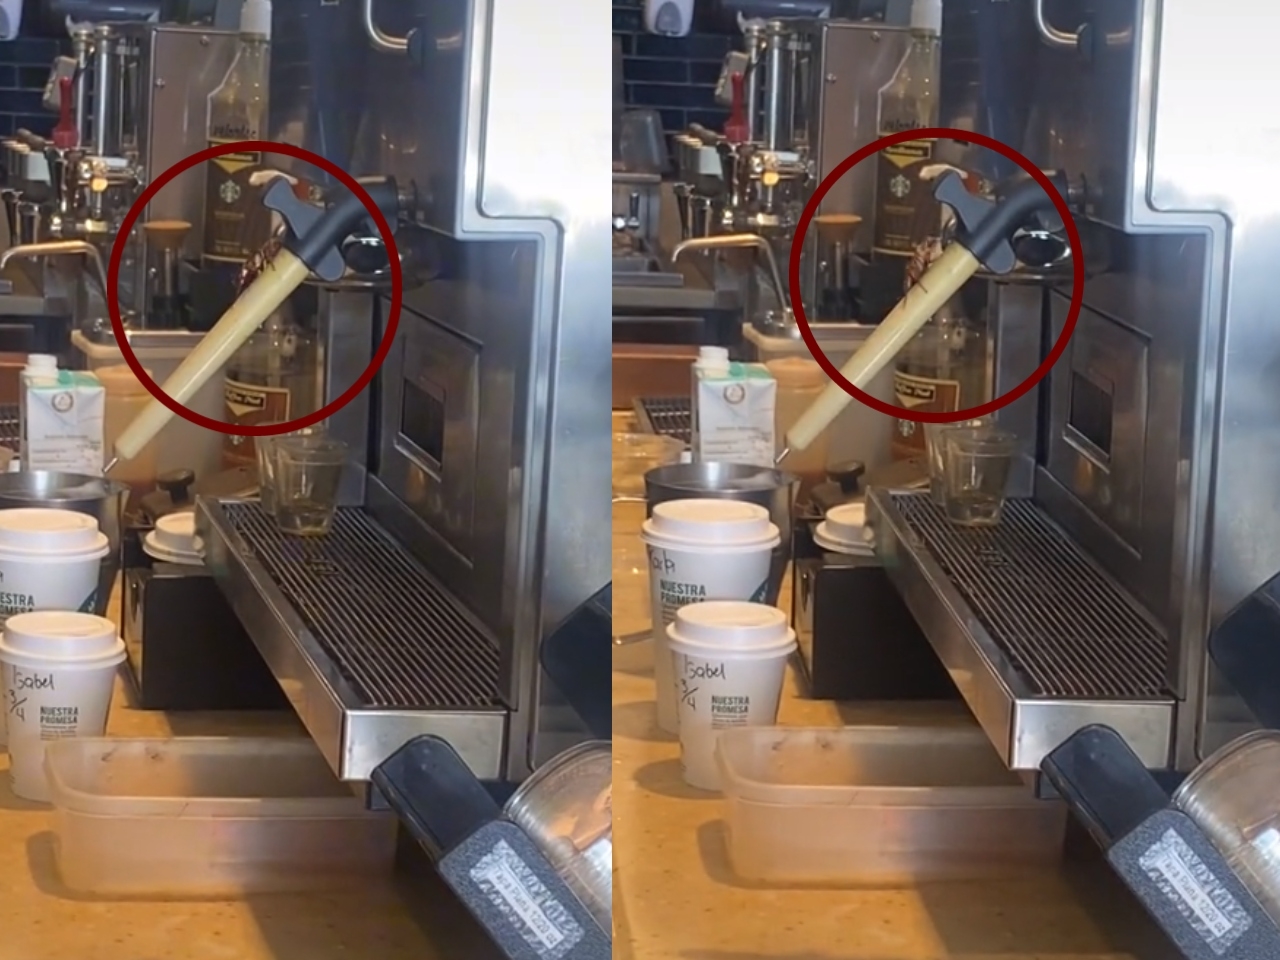 Quitan cucaracha de una máquina de café en un Starbucks presuntamente de Cancún: VIDEO